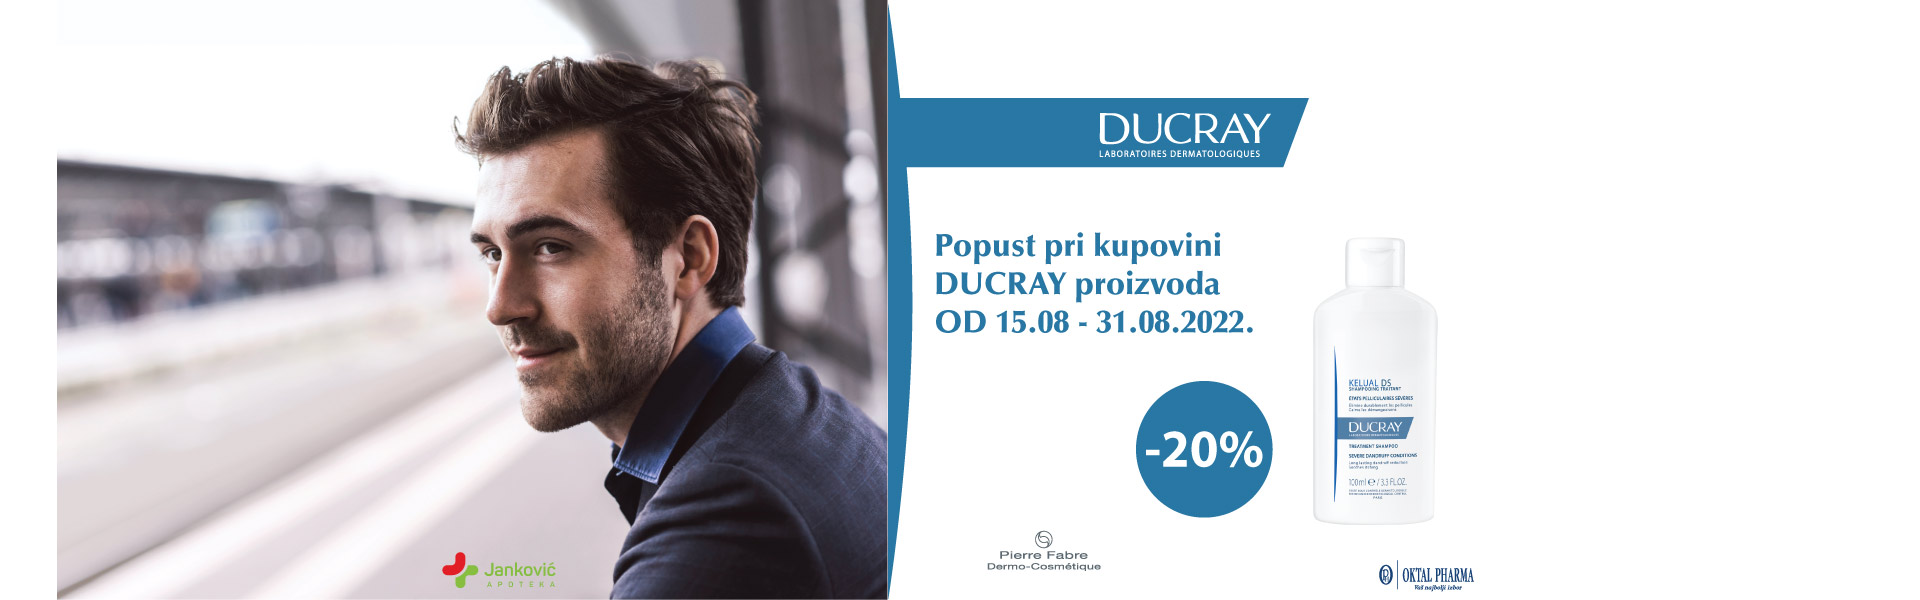 Ducray 20% POPUST